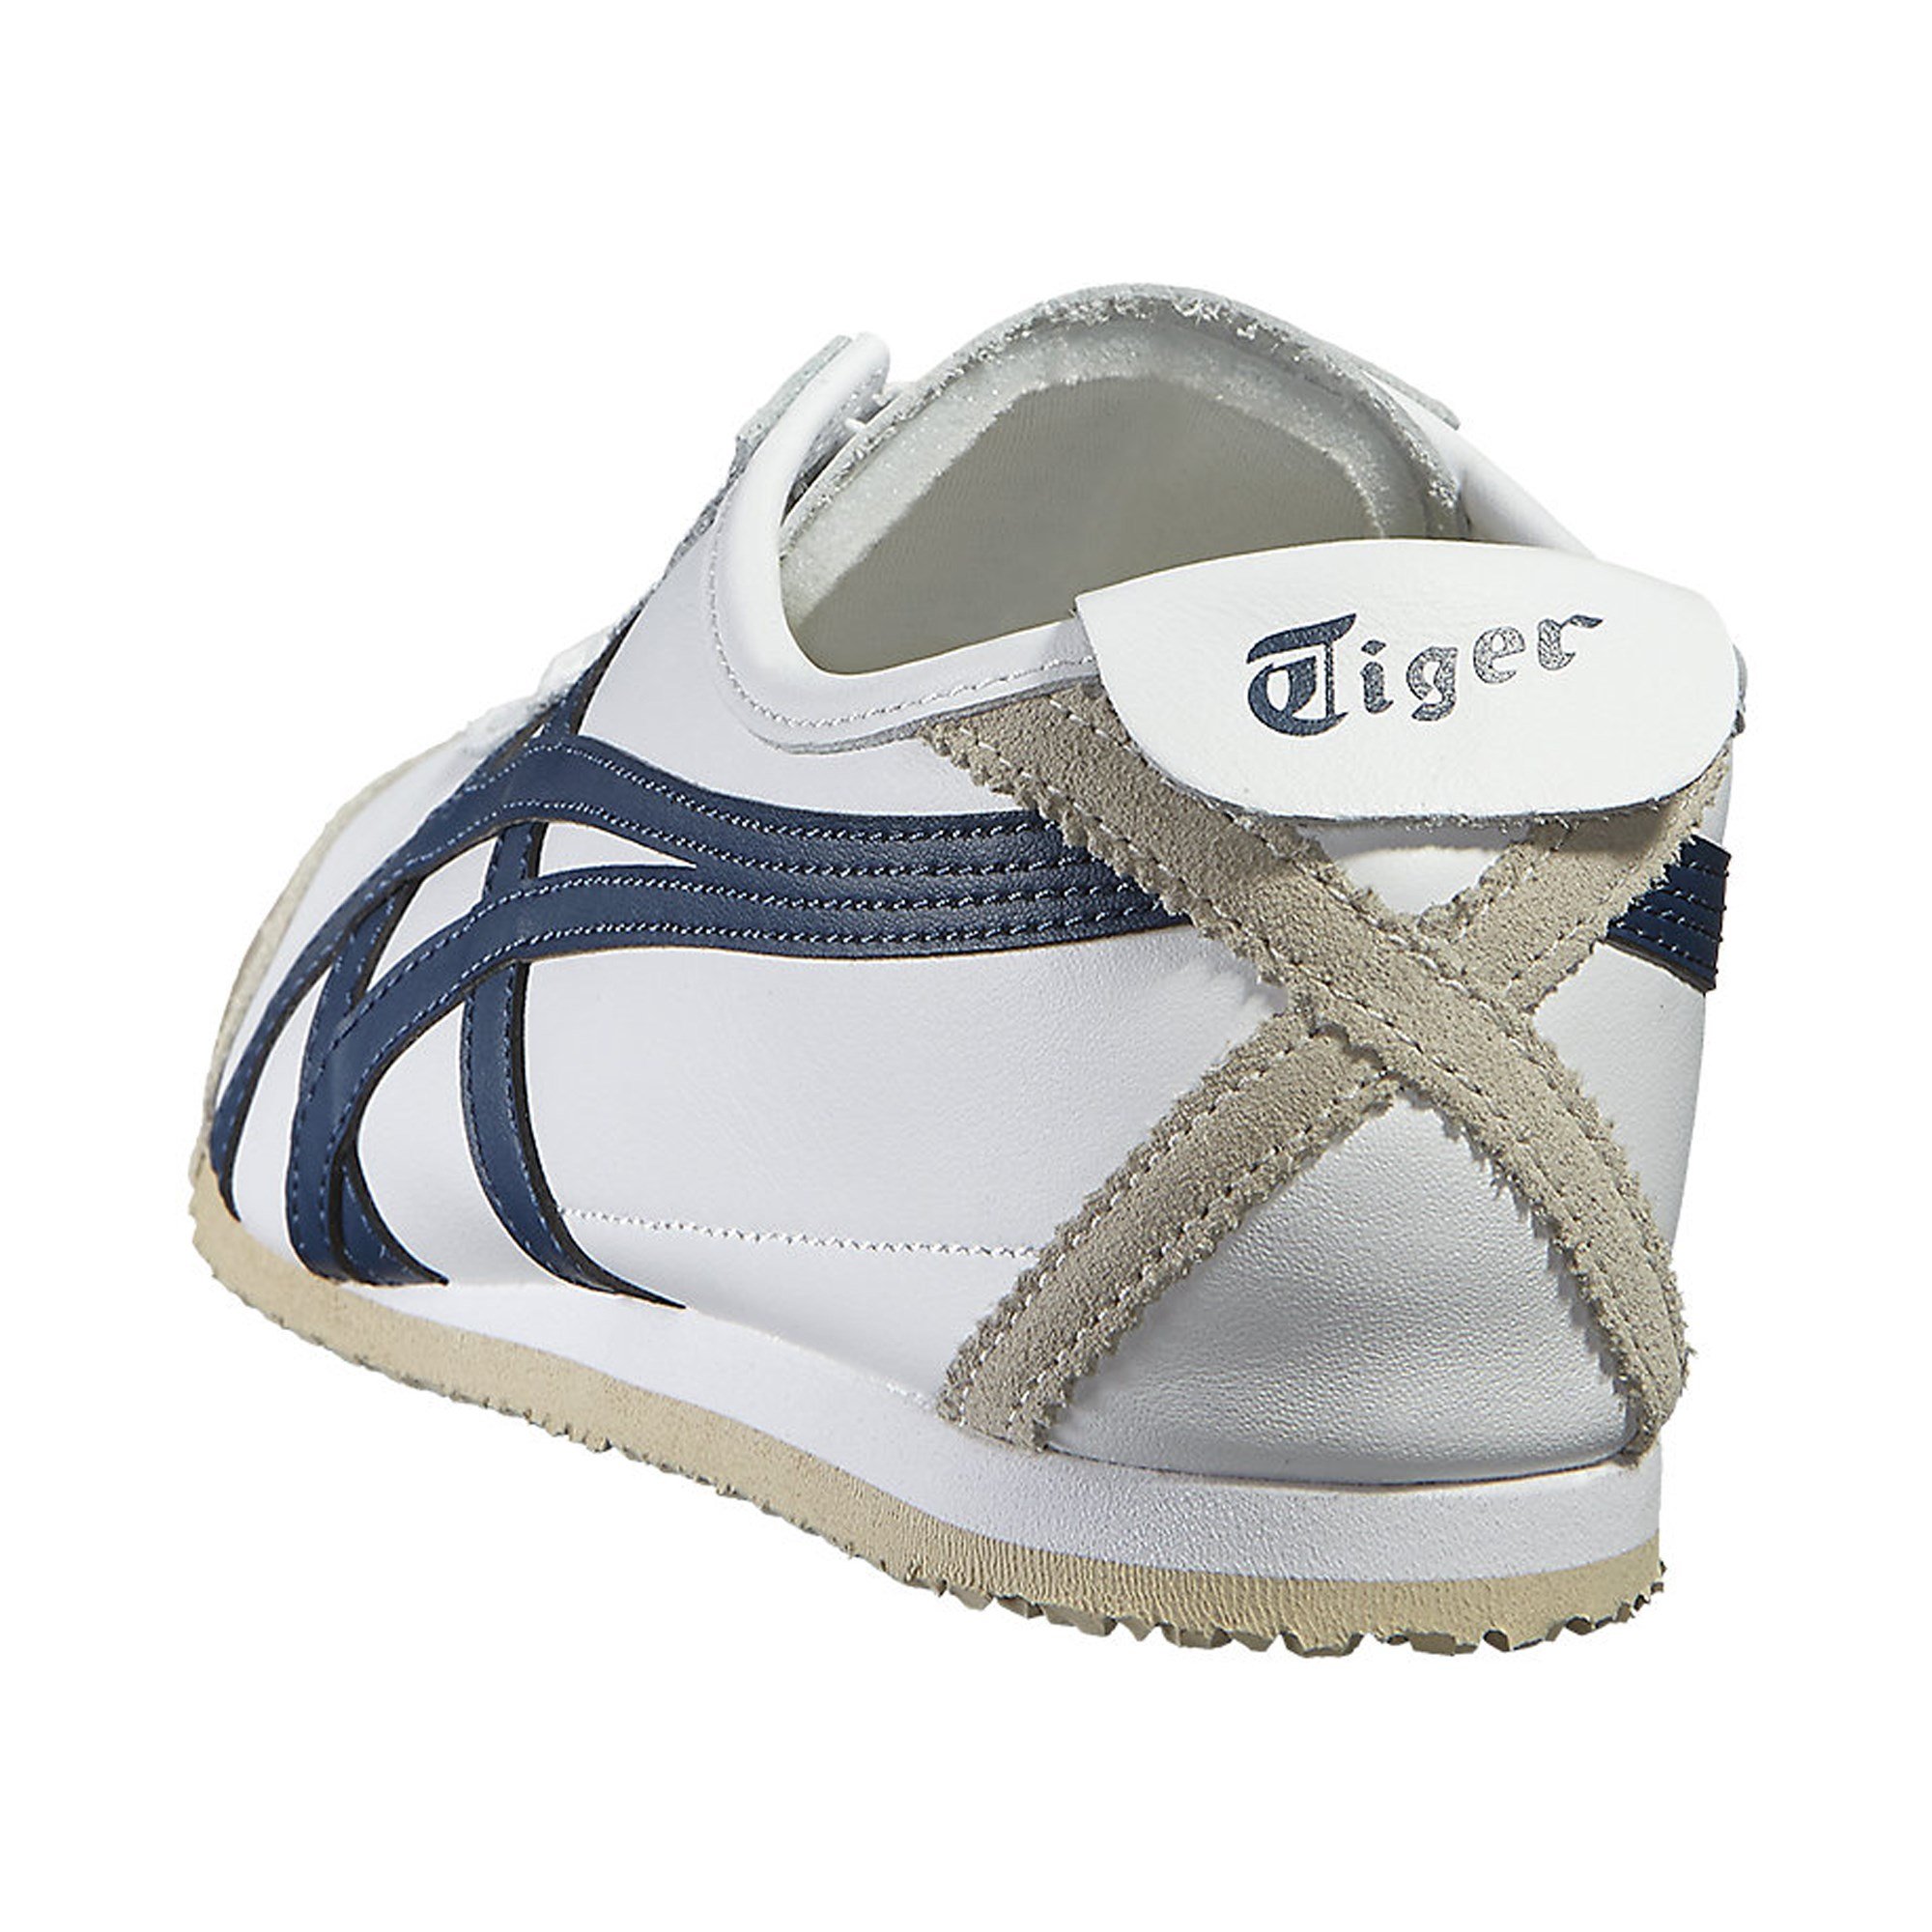 Onitsuka Tiger Mexico 66 Bayan Spor Ayakkabı Ürün kodu: 0D4J2L-G18 |  Etichet Sport